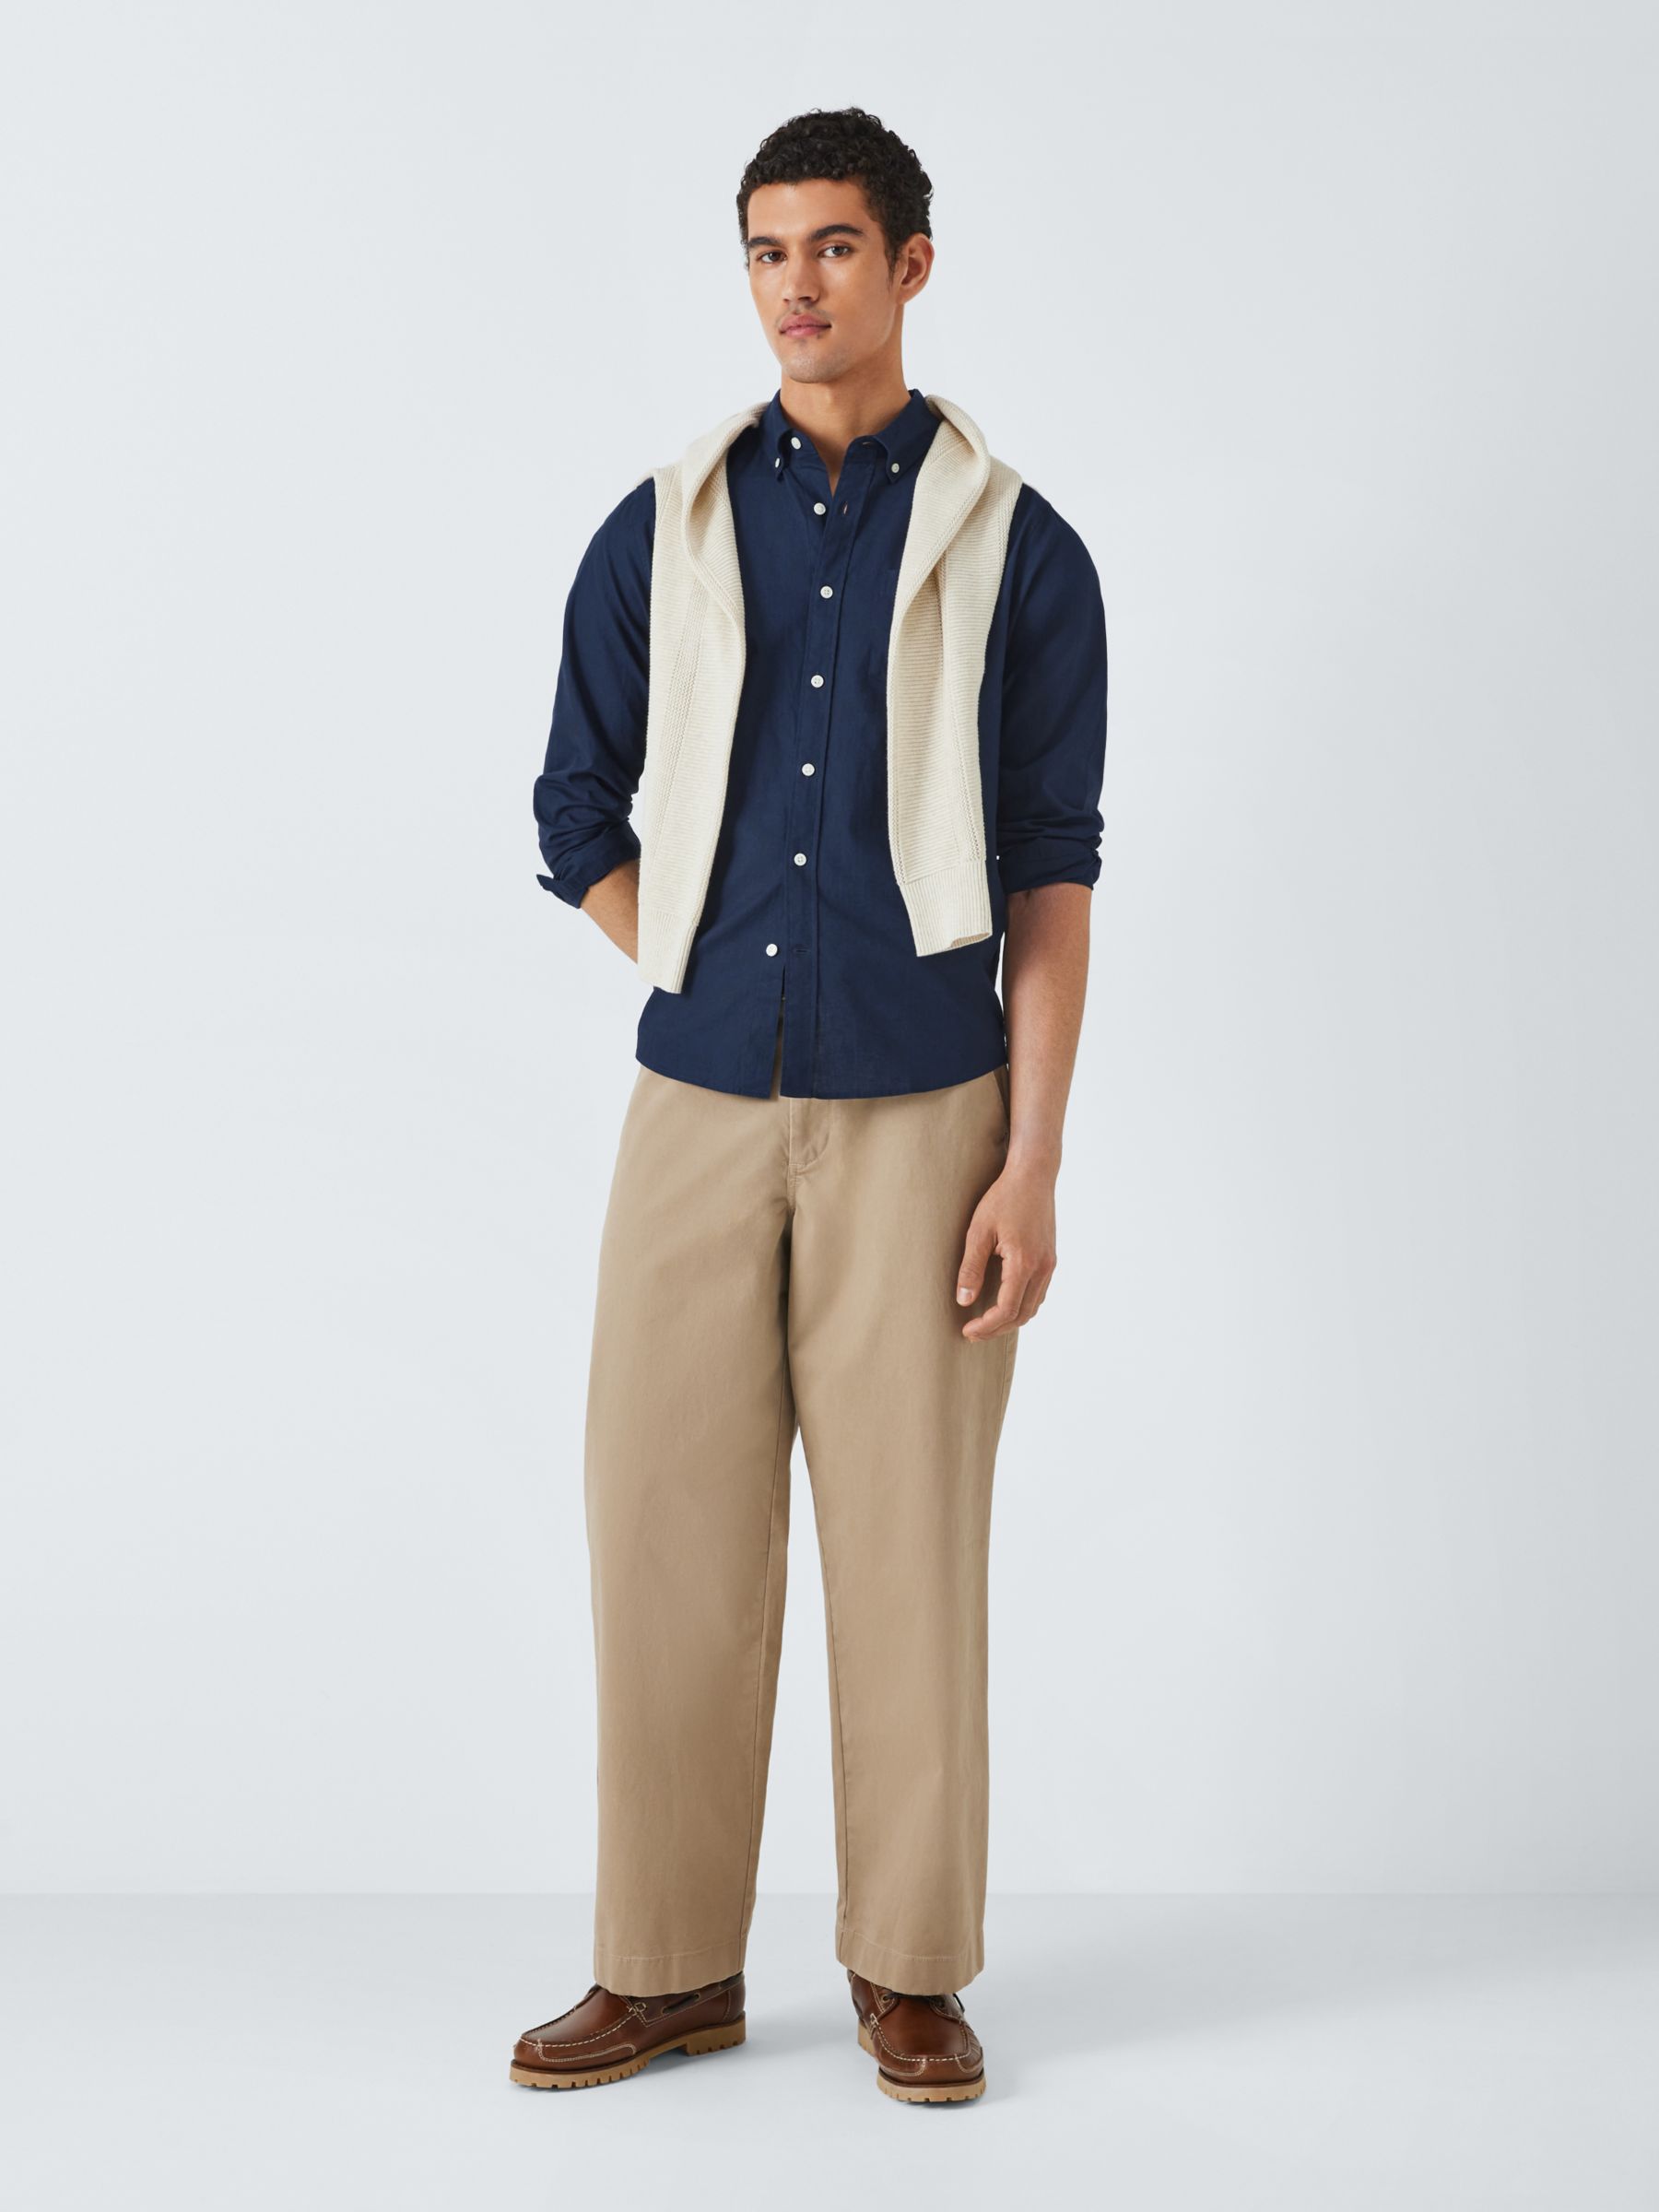 Buy John Lewis Linen Blend Long Sleeve Shirt, Navy Online at johnlewis.com